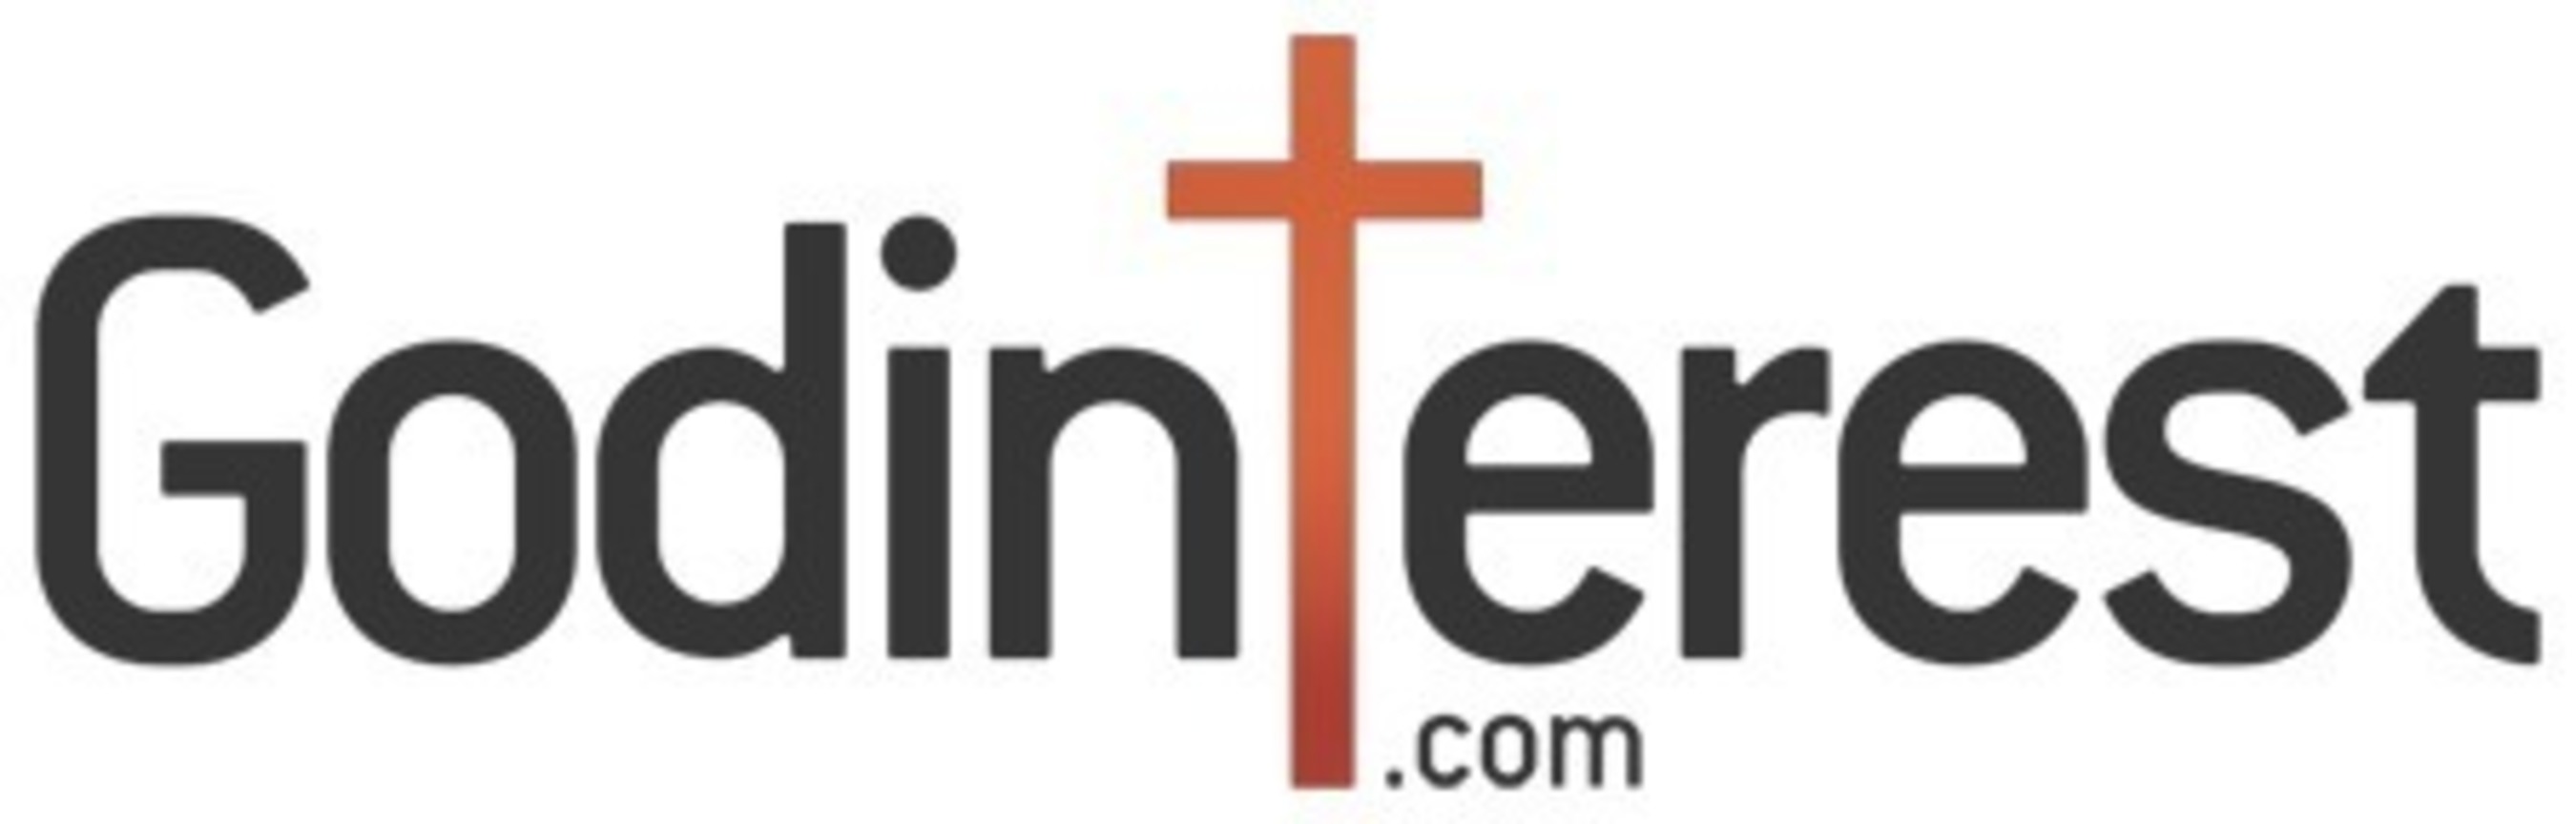 Godinterest.com Logo (PRNewsFoto/Godinterest)